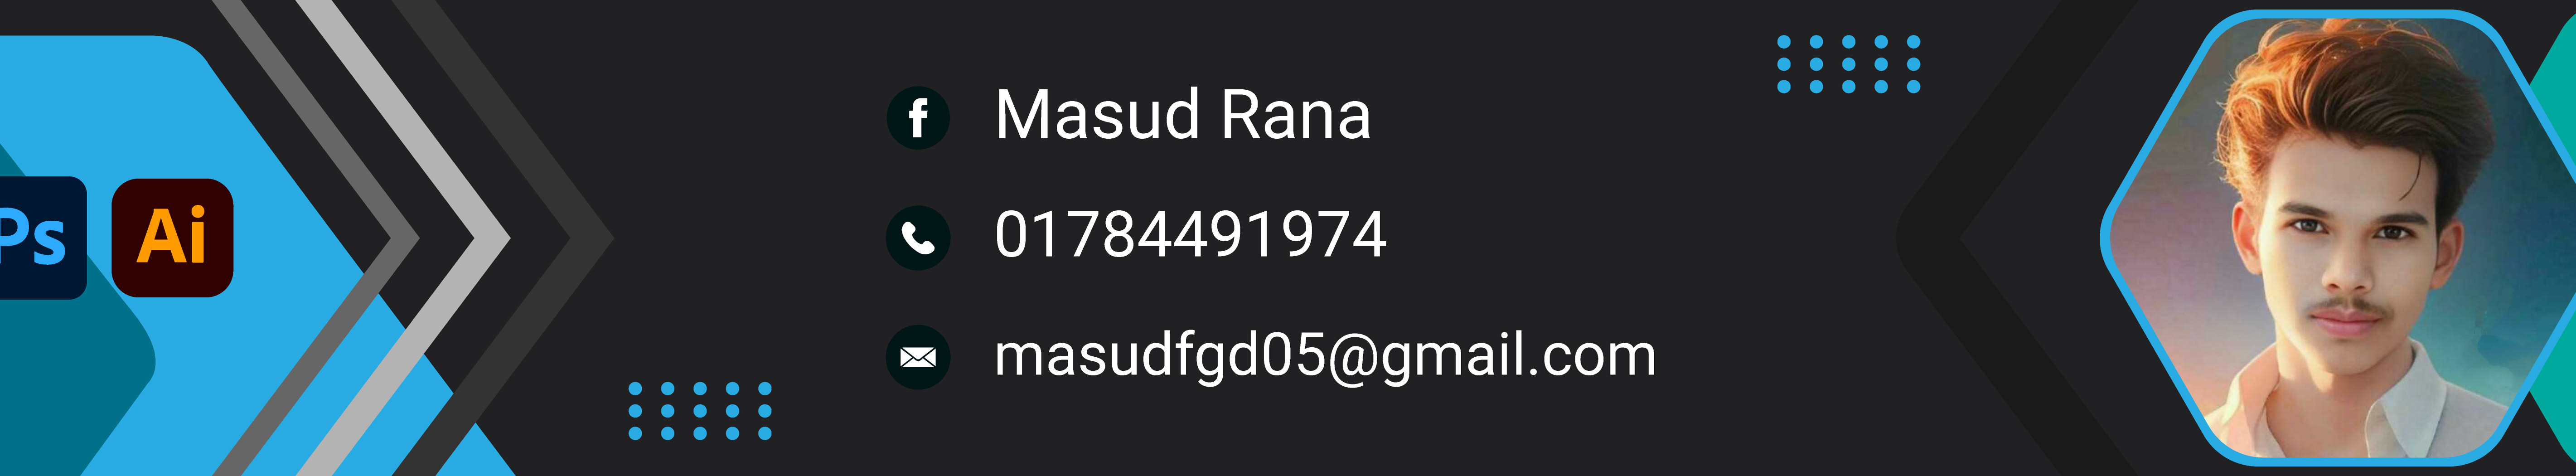 Md Masud Rana's profile banner